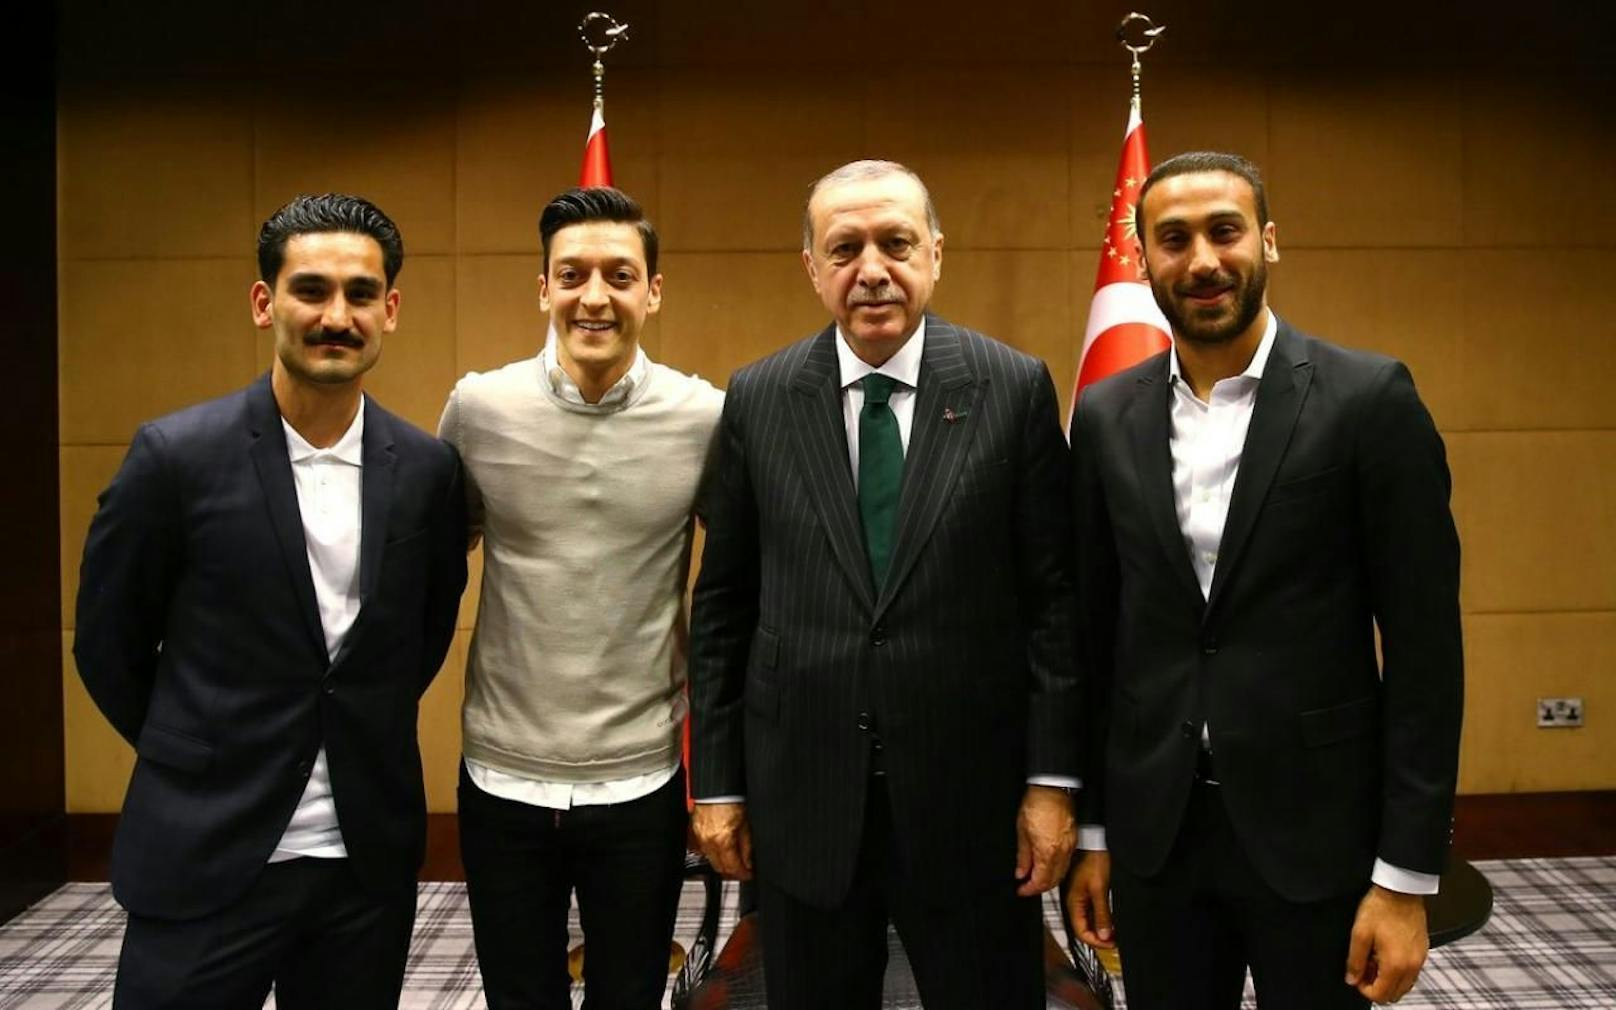 Politiker beleidigt Kicker-Star Özil als "Ziegenf..."